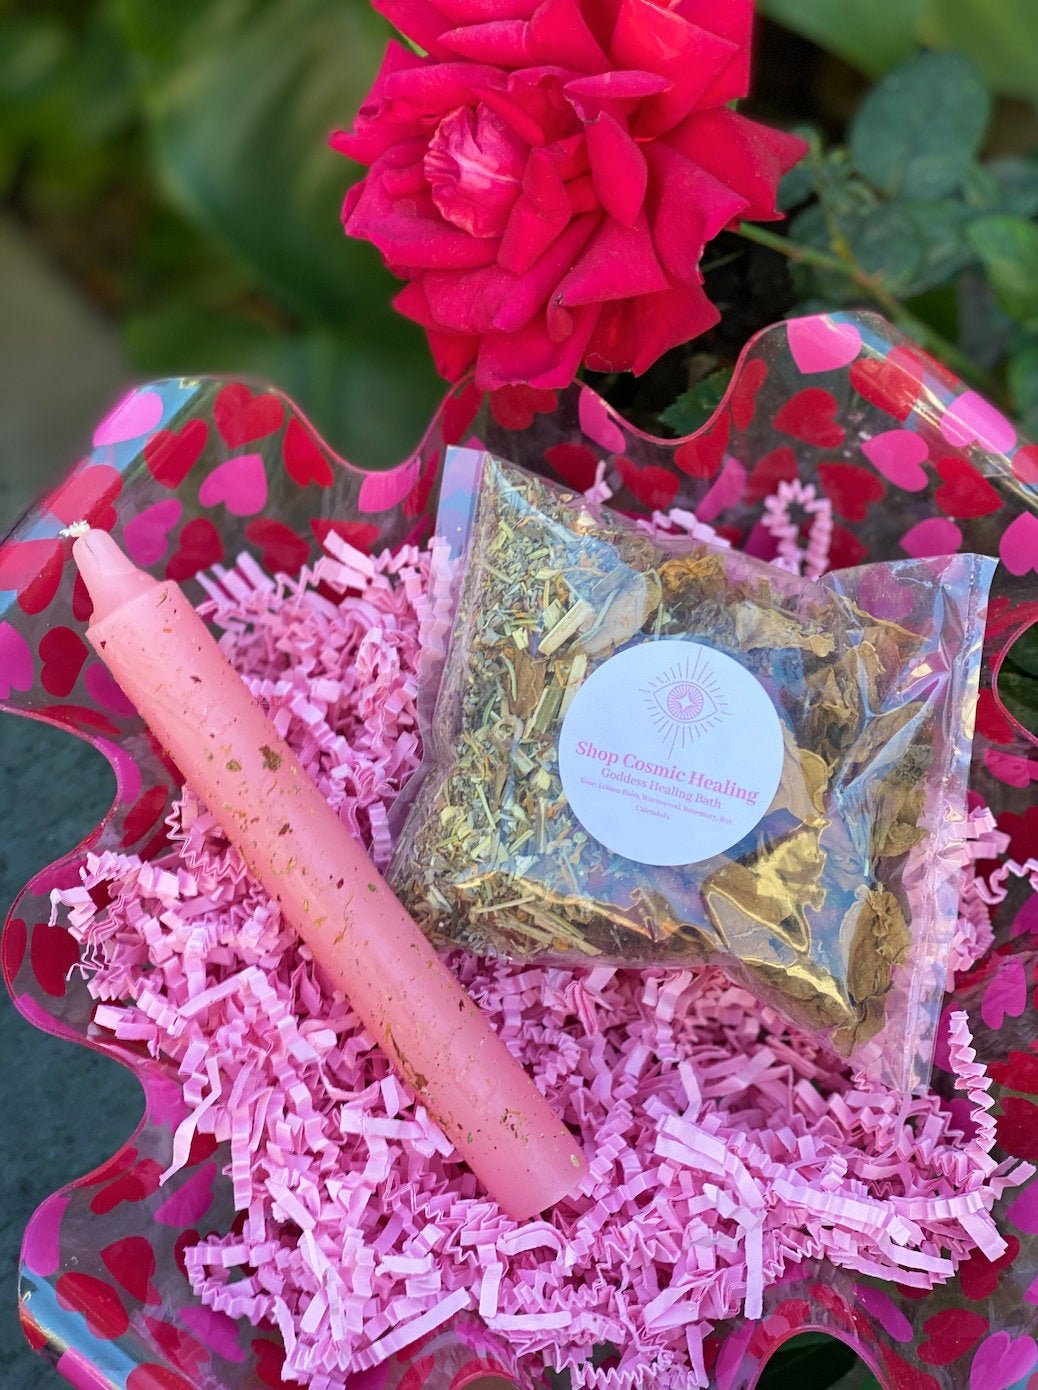 FIXED Divine Feminine Healing Ritual Candle Herb Rolled - Shop Cosmic Healing